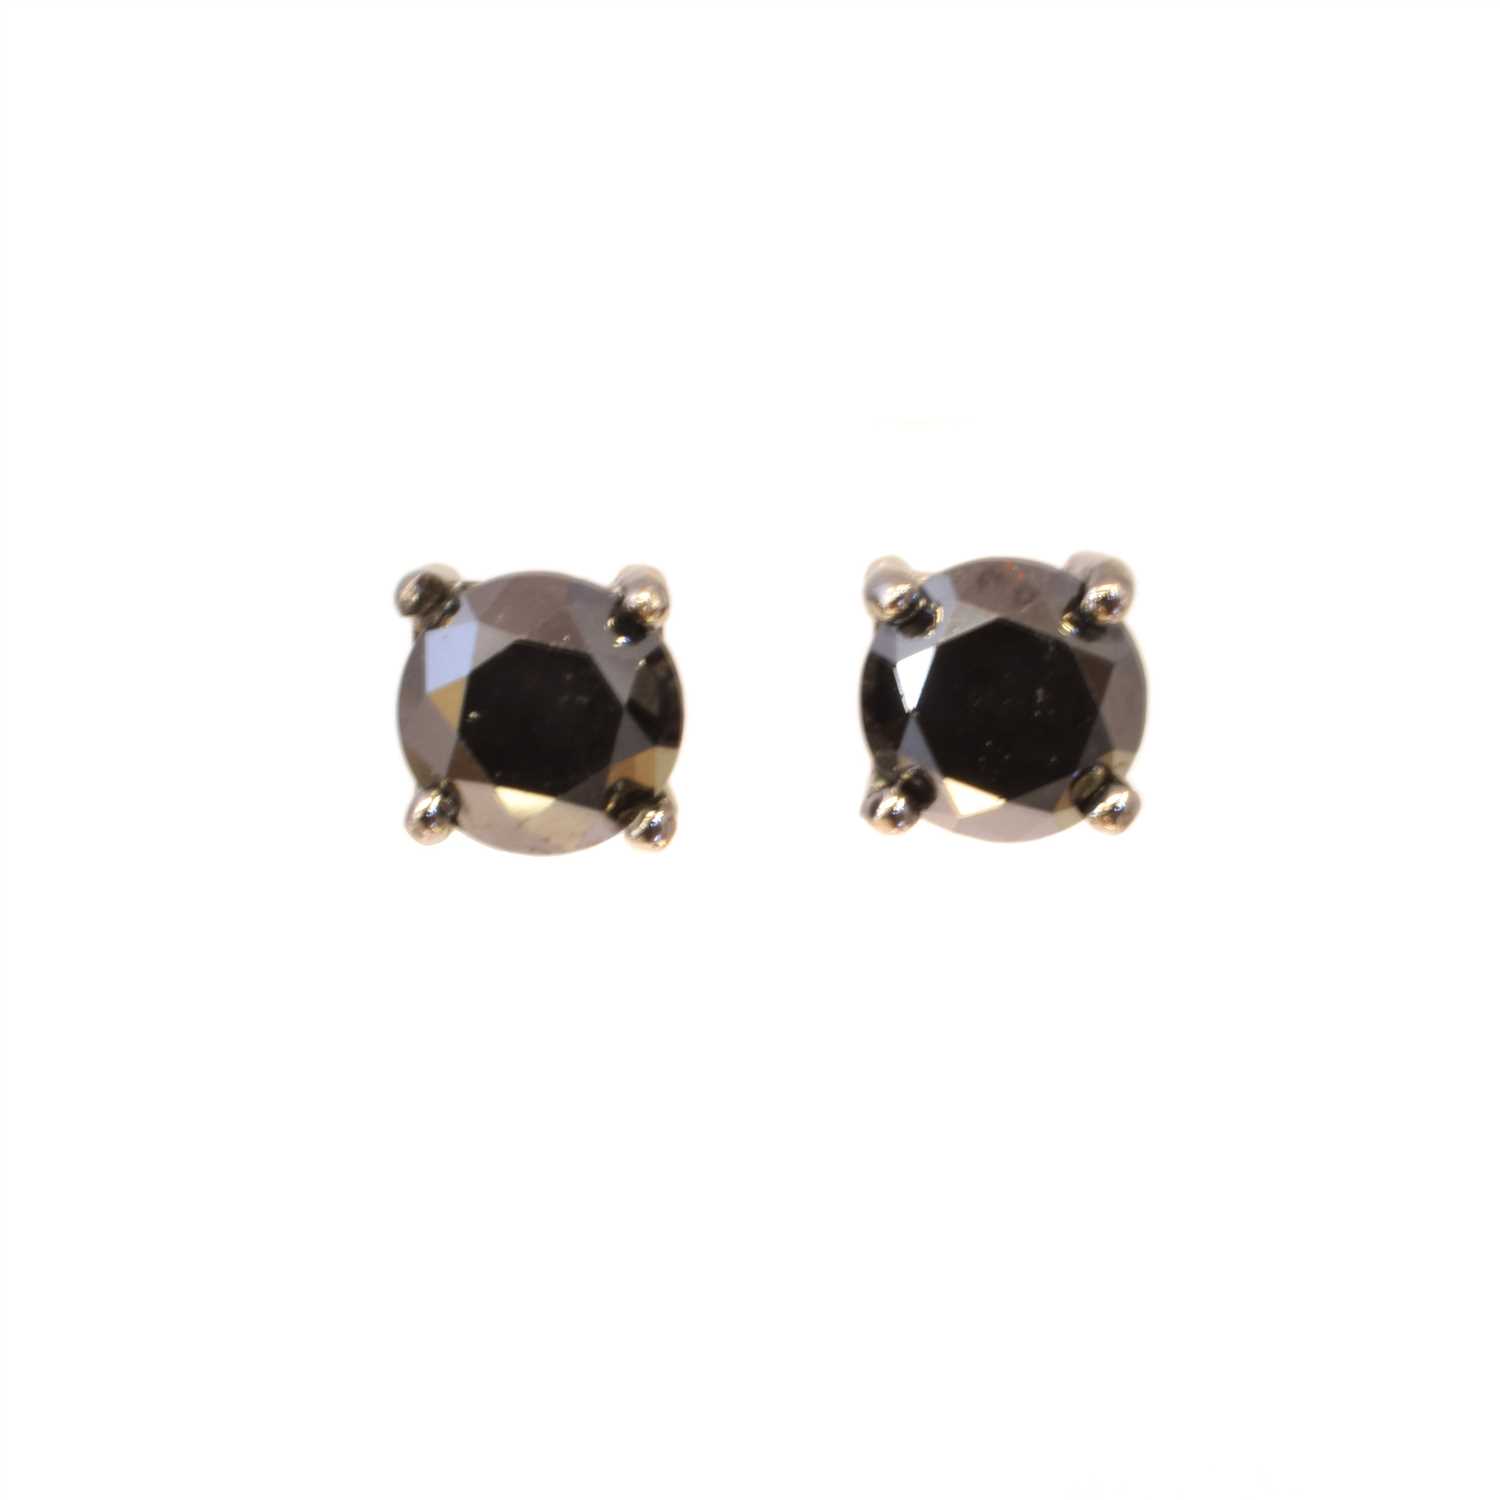 Lot 116 - A pair of brilliant cut black diamond stud earrings